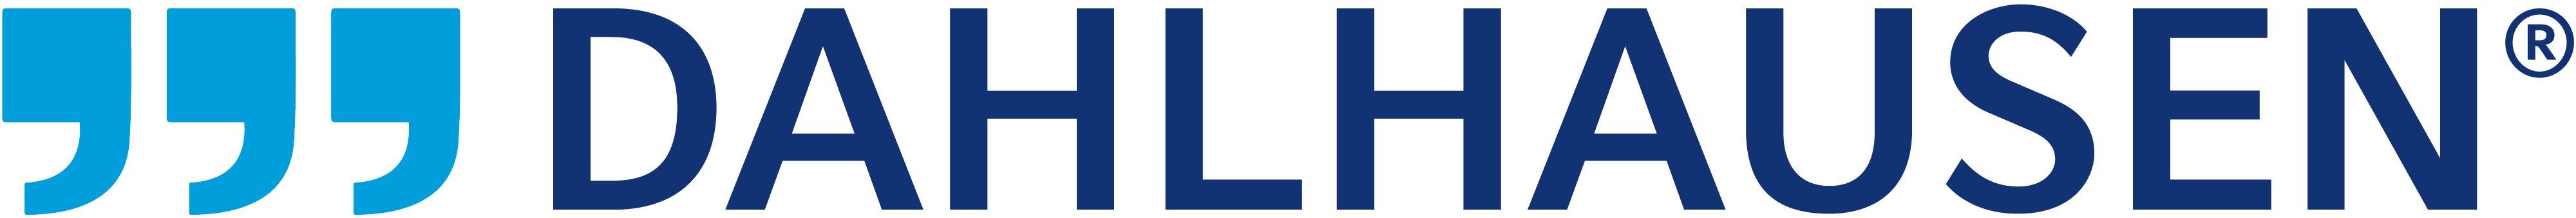 P.J.Dahlhausen & Co.GmbH